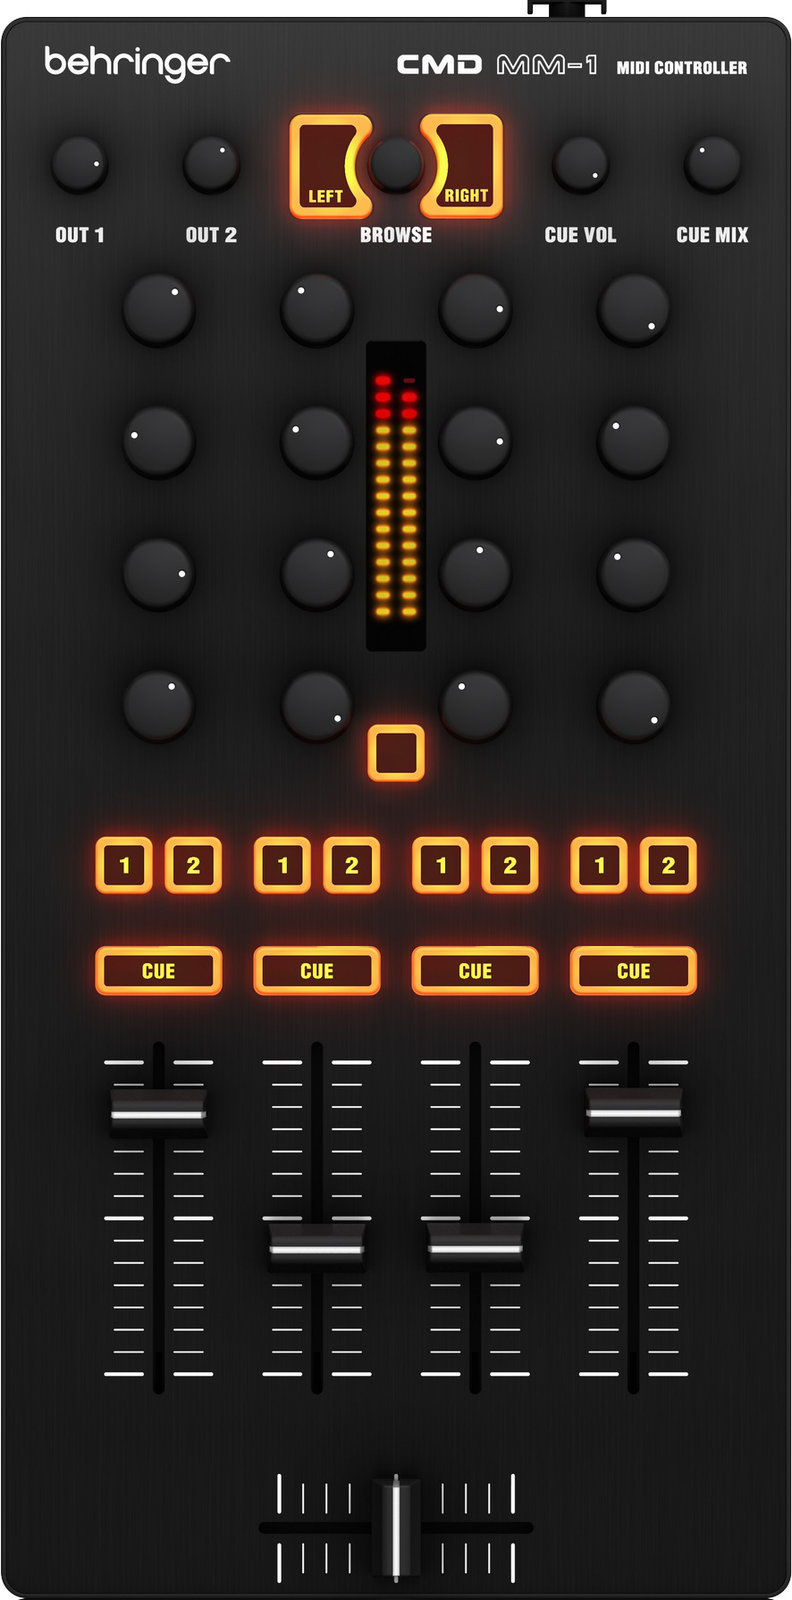 MIDI kontroler, MIDI ovládač Behringer CMD MM-1